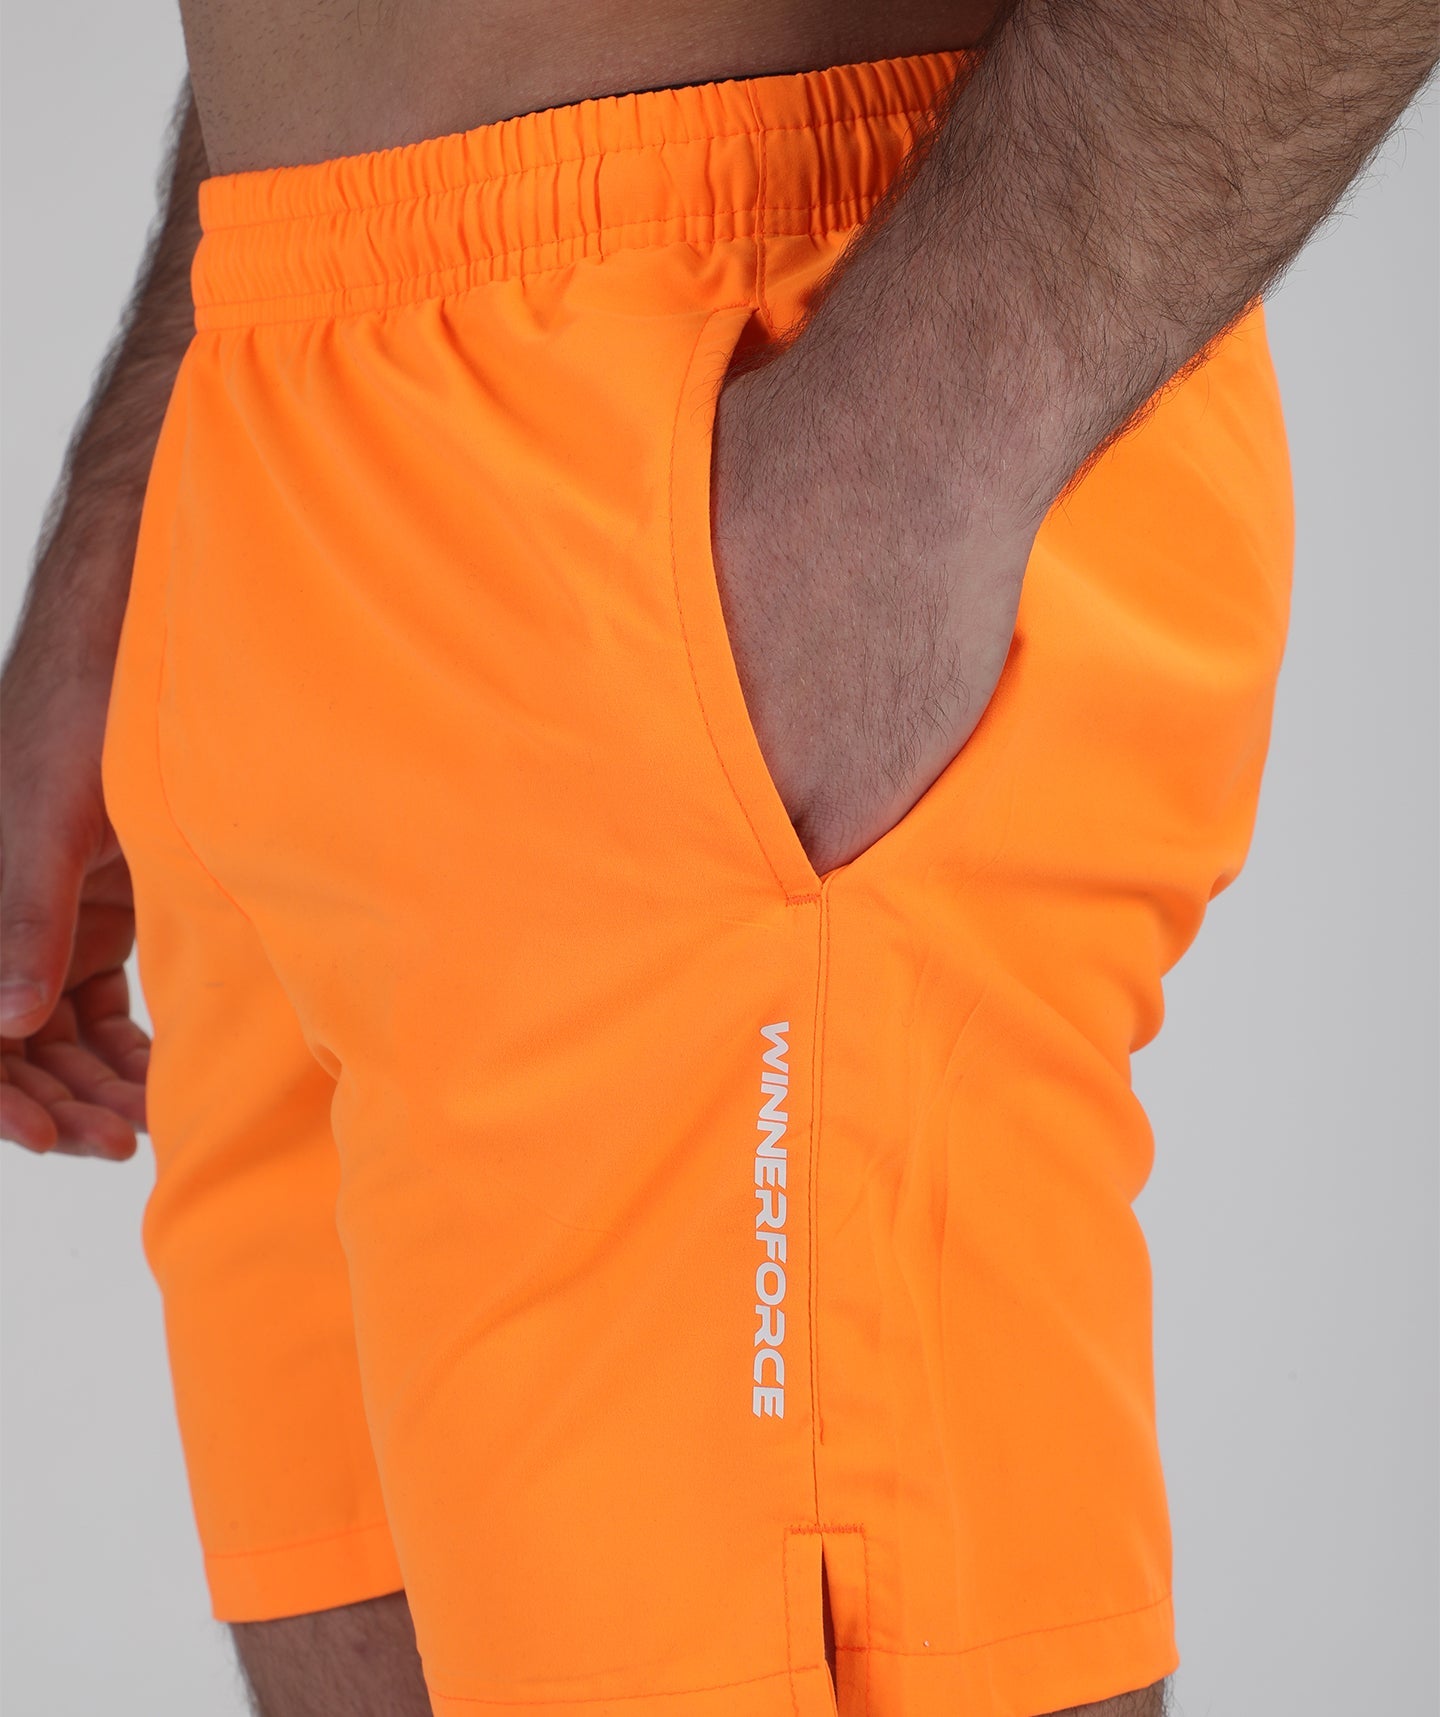 Kg ⚜  
10163-71 ⚜  
D4 ⚜  
PANTONE: No pantone color assigned ⚜  
spacer mesh fabric, 100 %polyester, 150 cm, neon orange